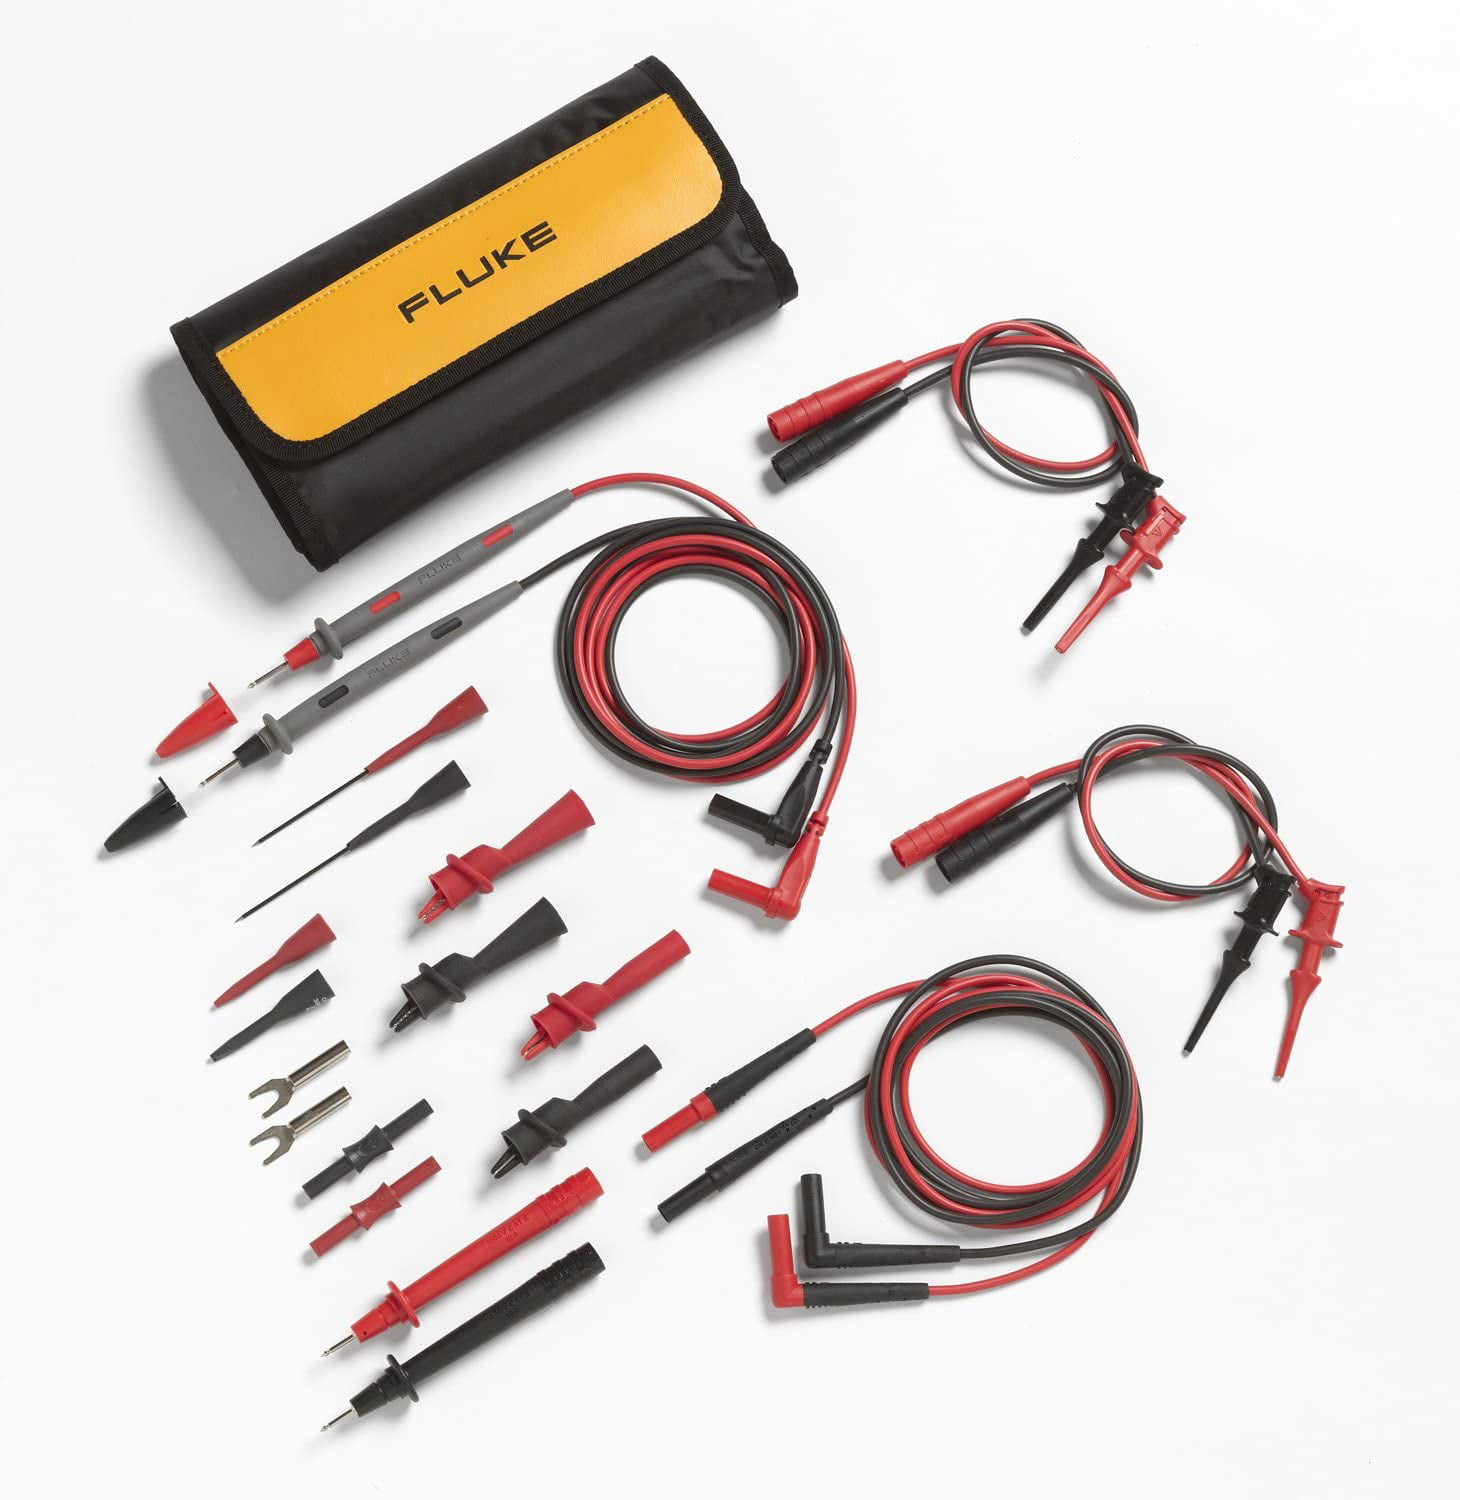 16X Universal Multifunction Digital Test Lead Multimeter Probe Cable Kit Set HYU 